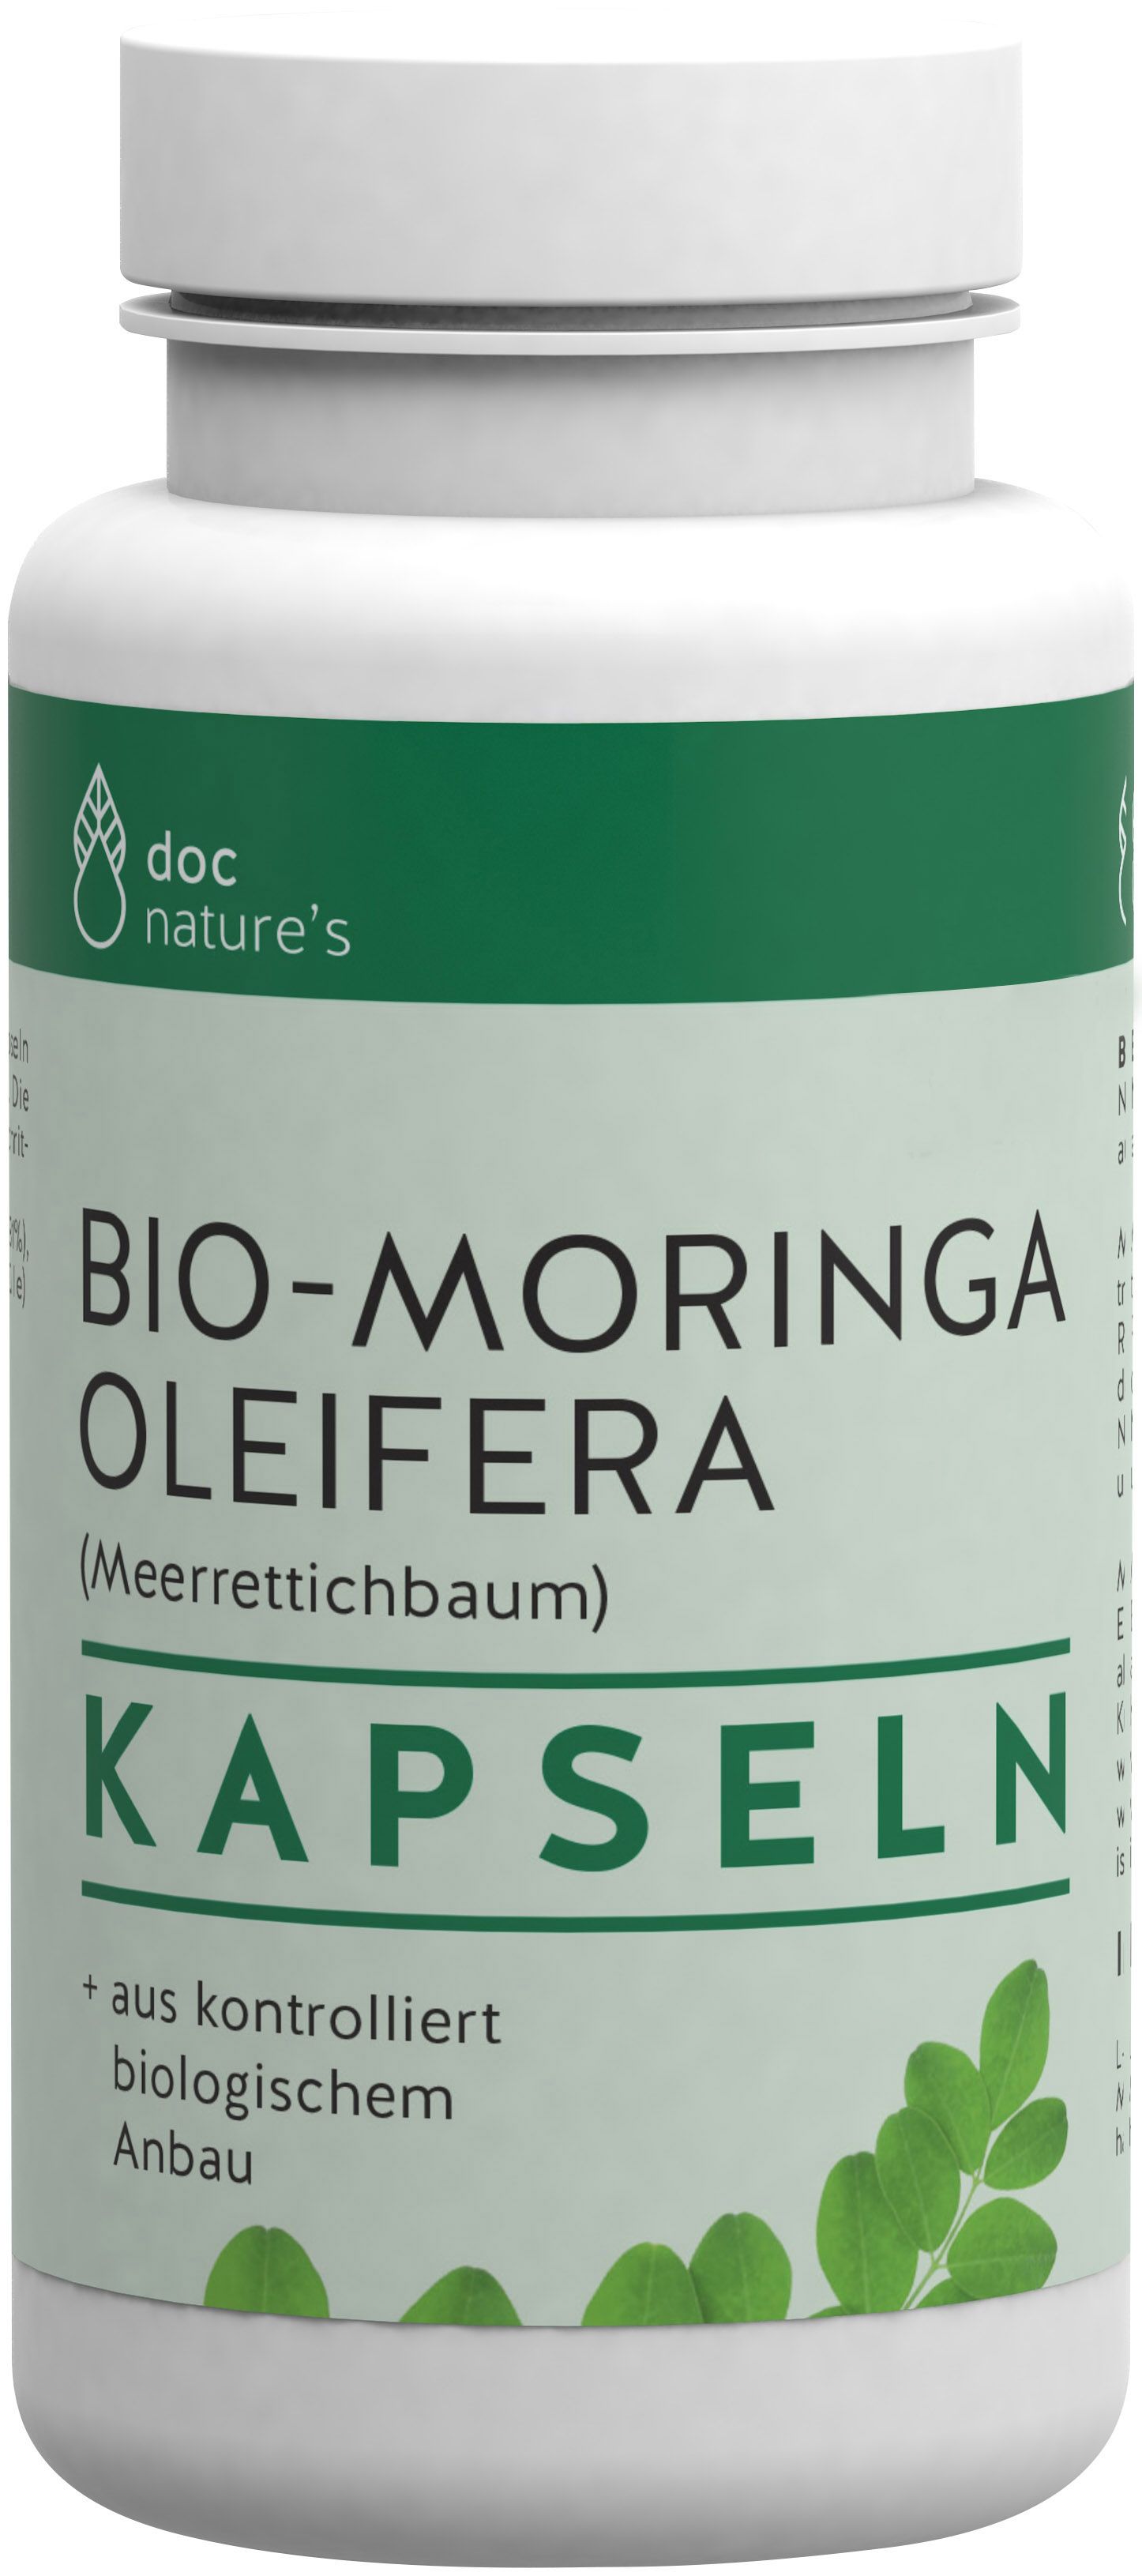 doc nature's  BIO-MORINGA OLEIFERA KAPSELN